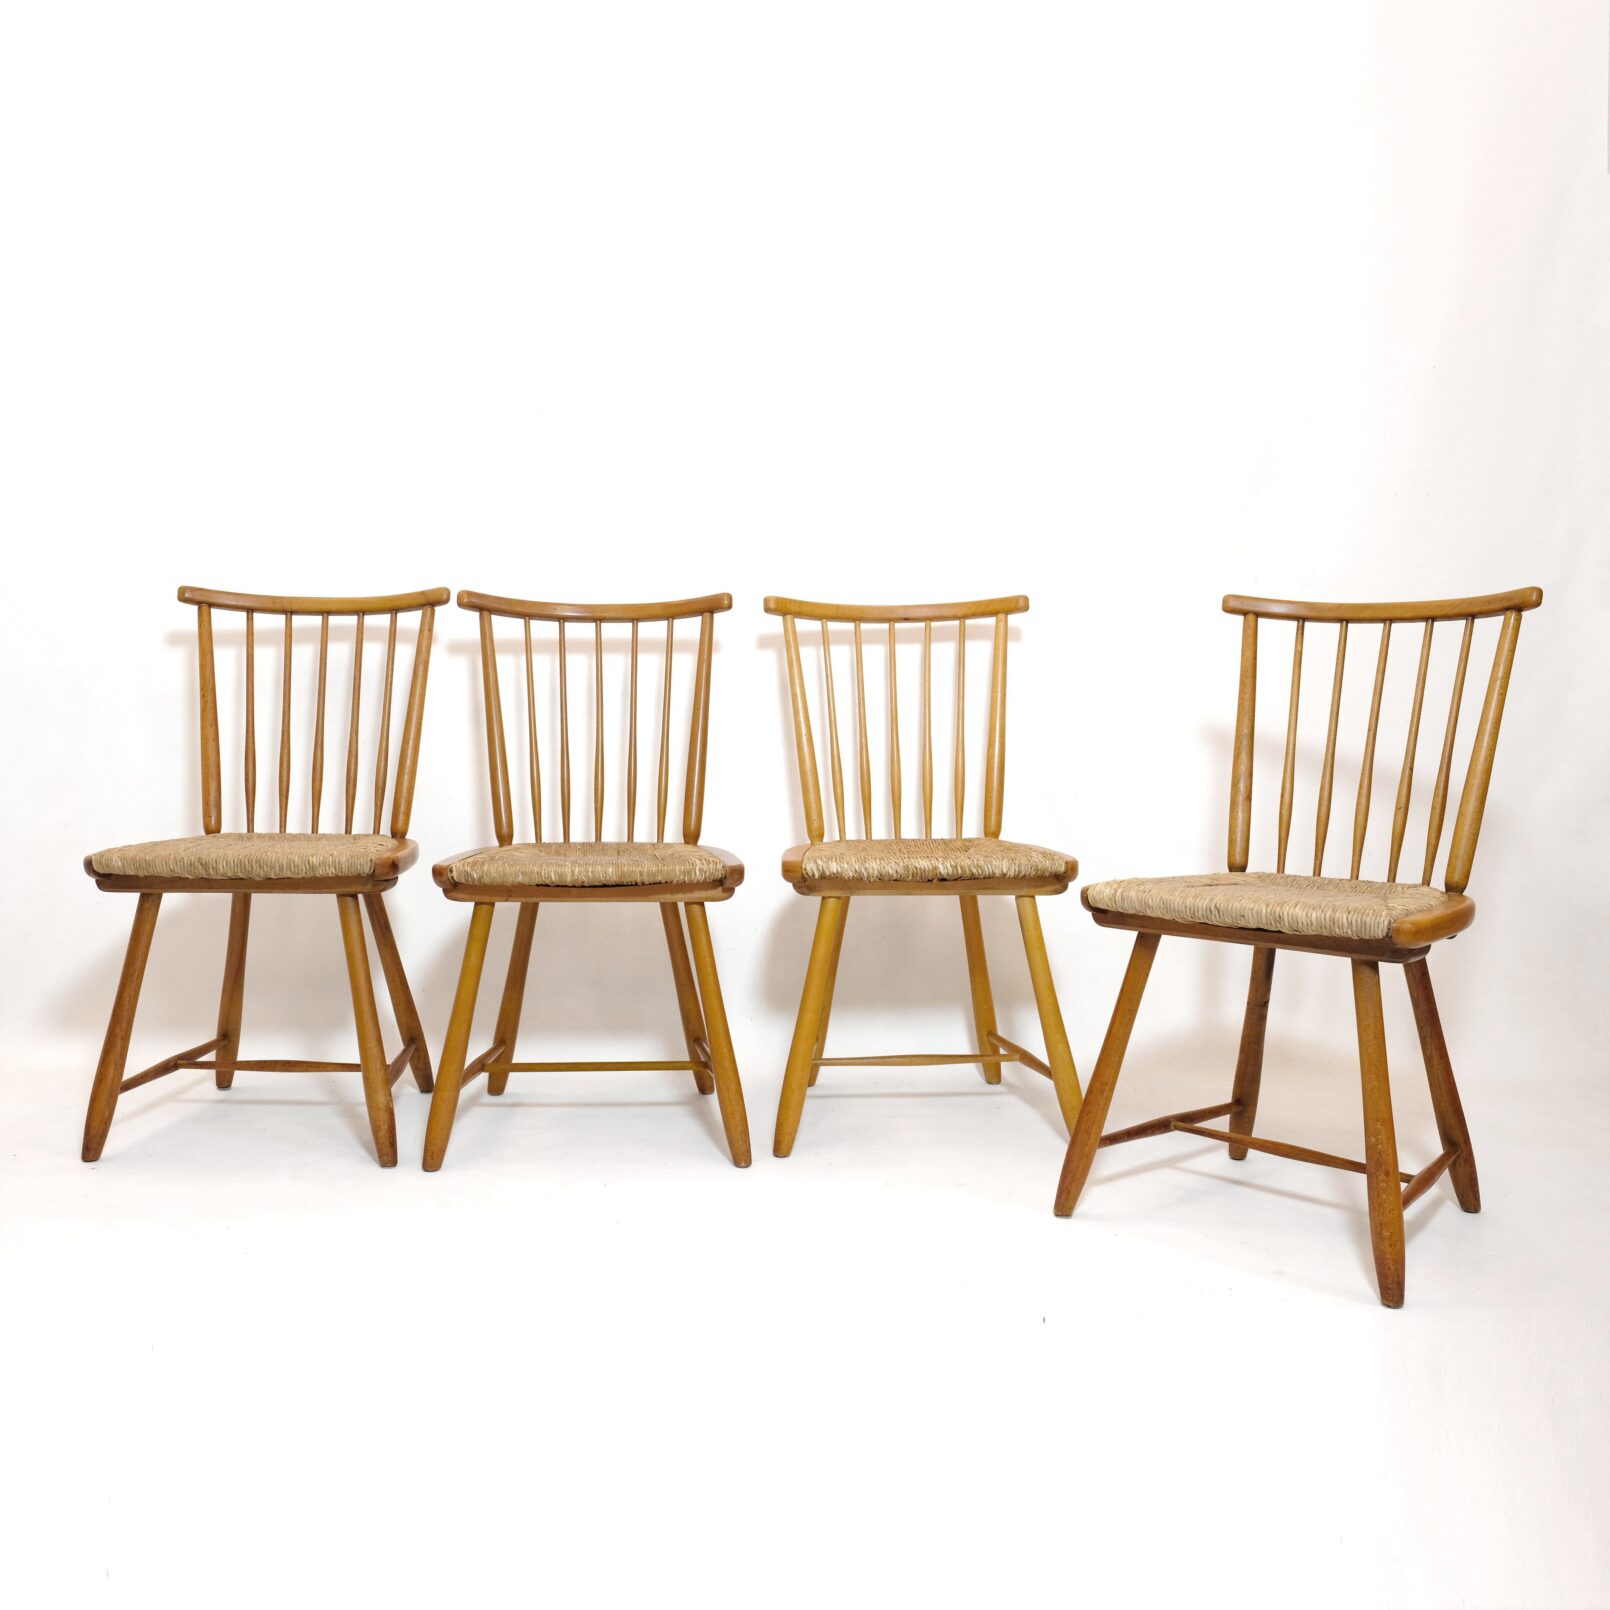 Arno Lambrecht, set of 4 WKS chairs, 1955.